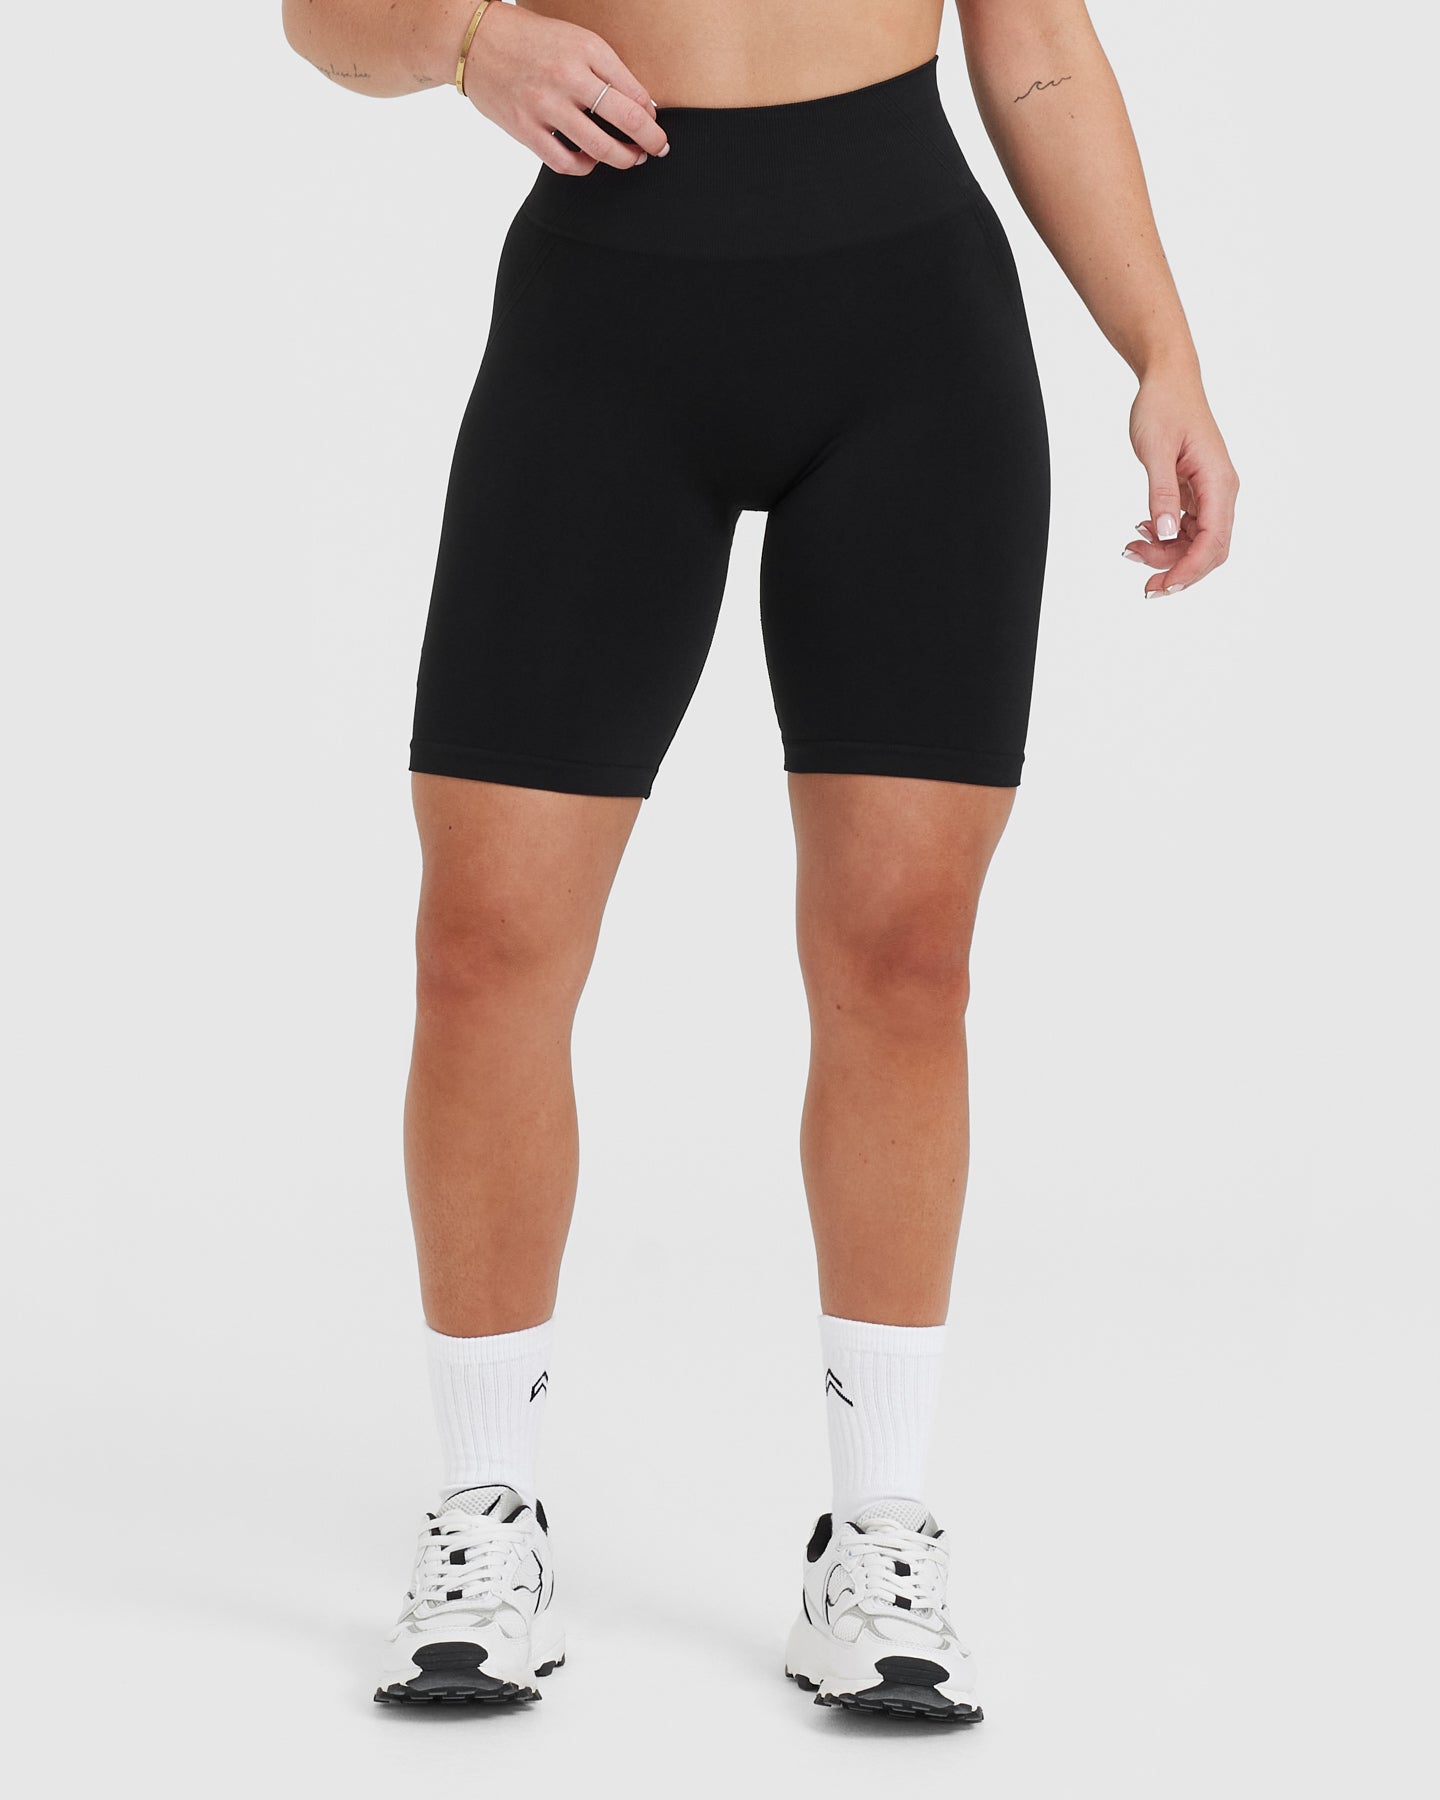 Seamless Bike shorts